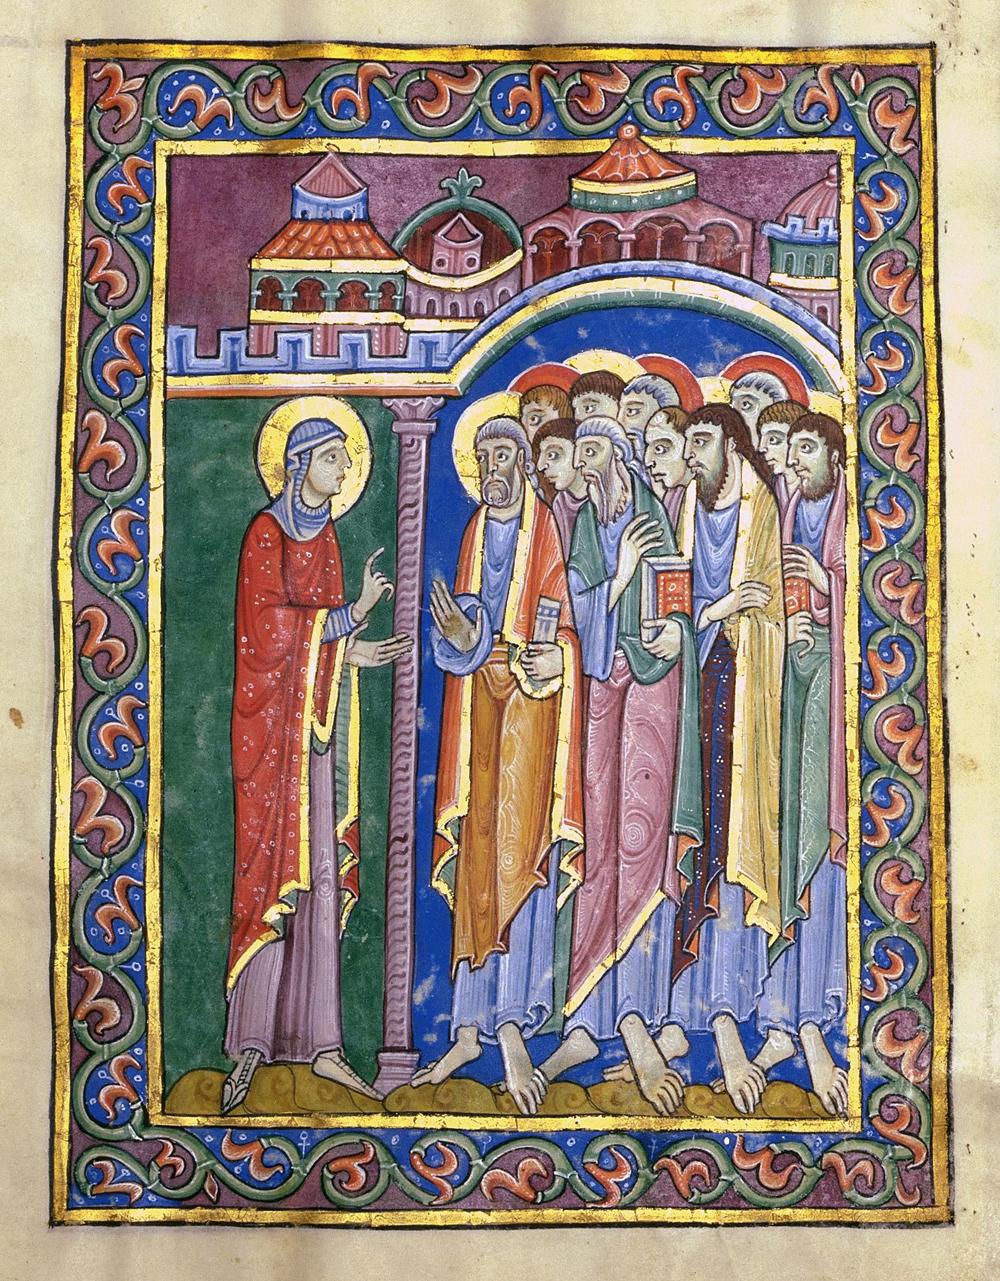 St. Alban's Psalter A scene depicting Mary Magdalene